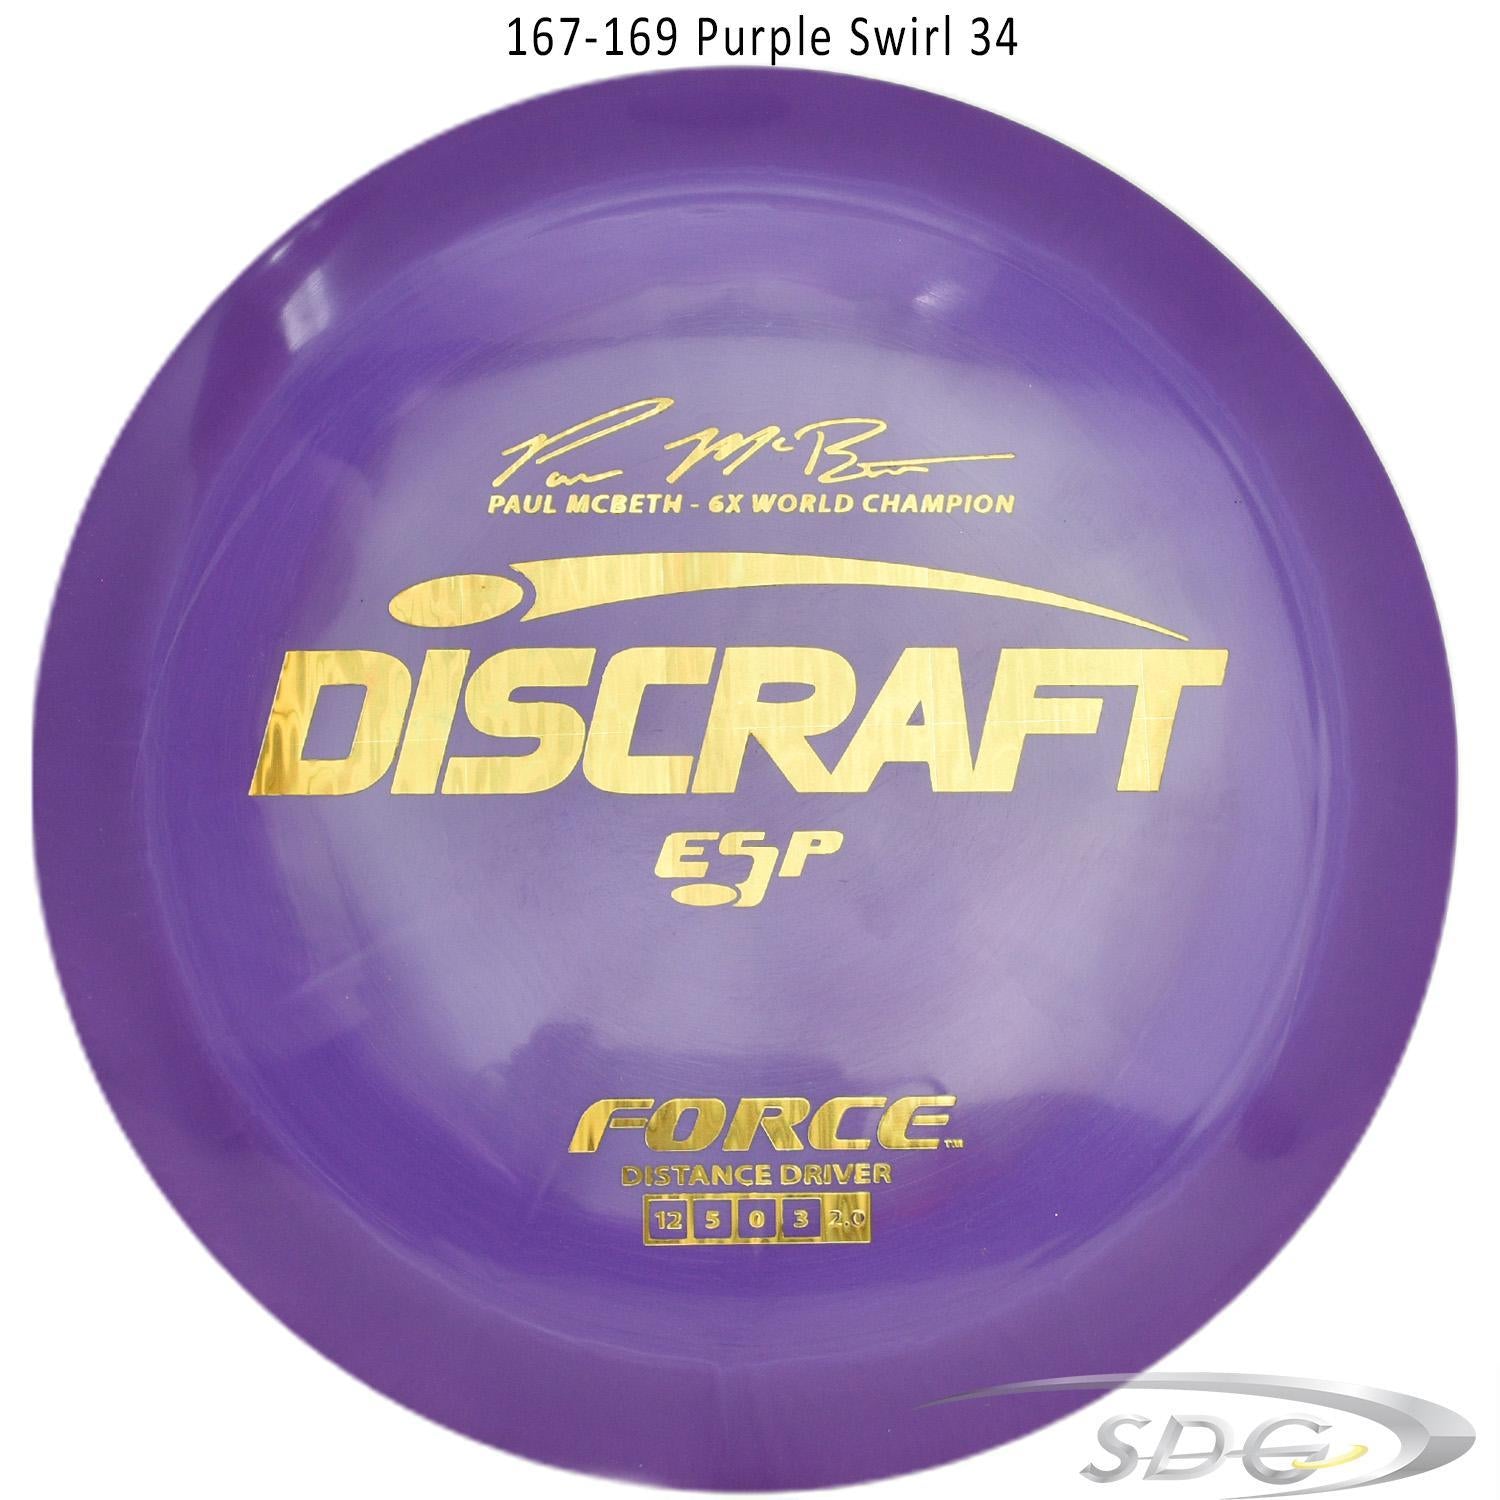 discraft-esp-force-6x-paul-mcbeth-signature-disc-golf-distance-driver-169-160-weights 167-169 Purple Swirl 34 